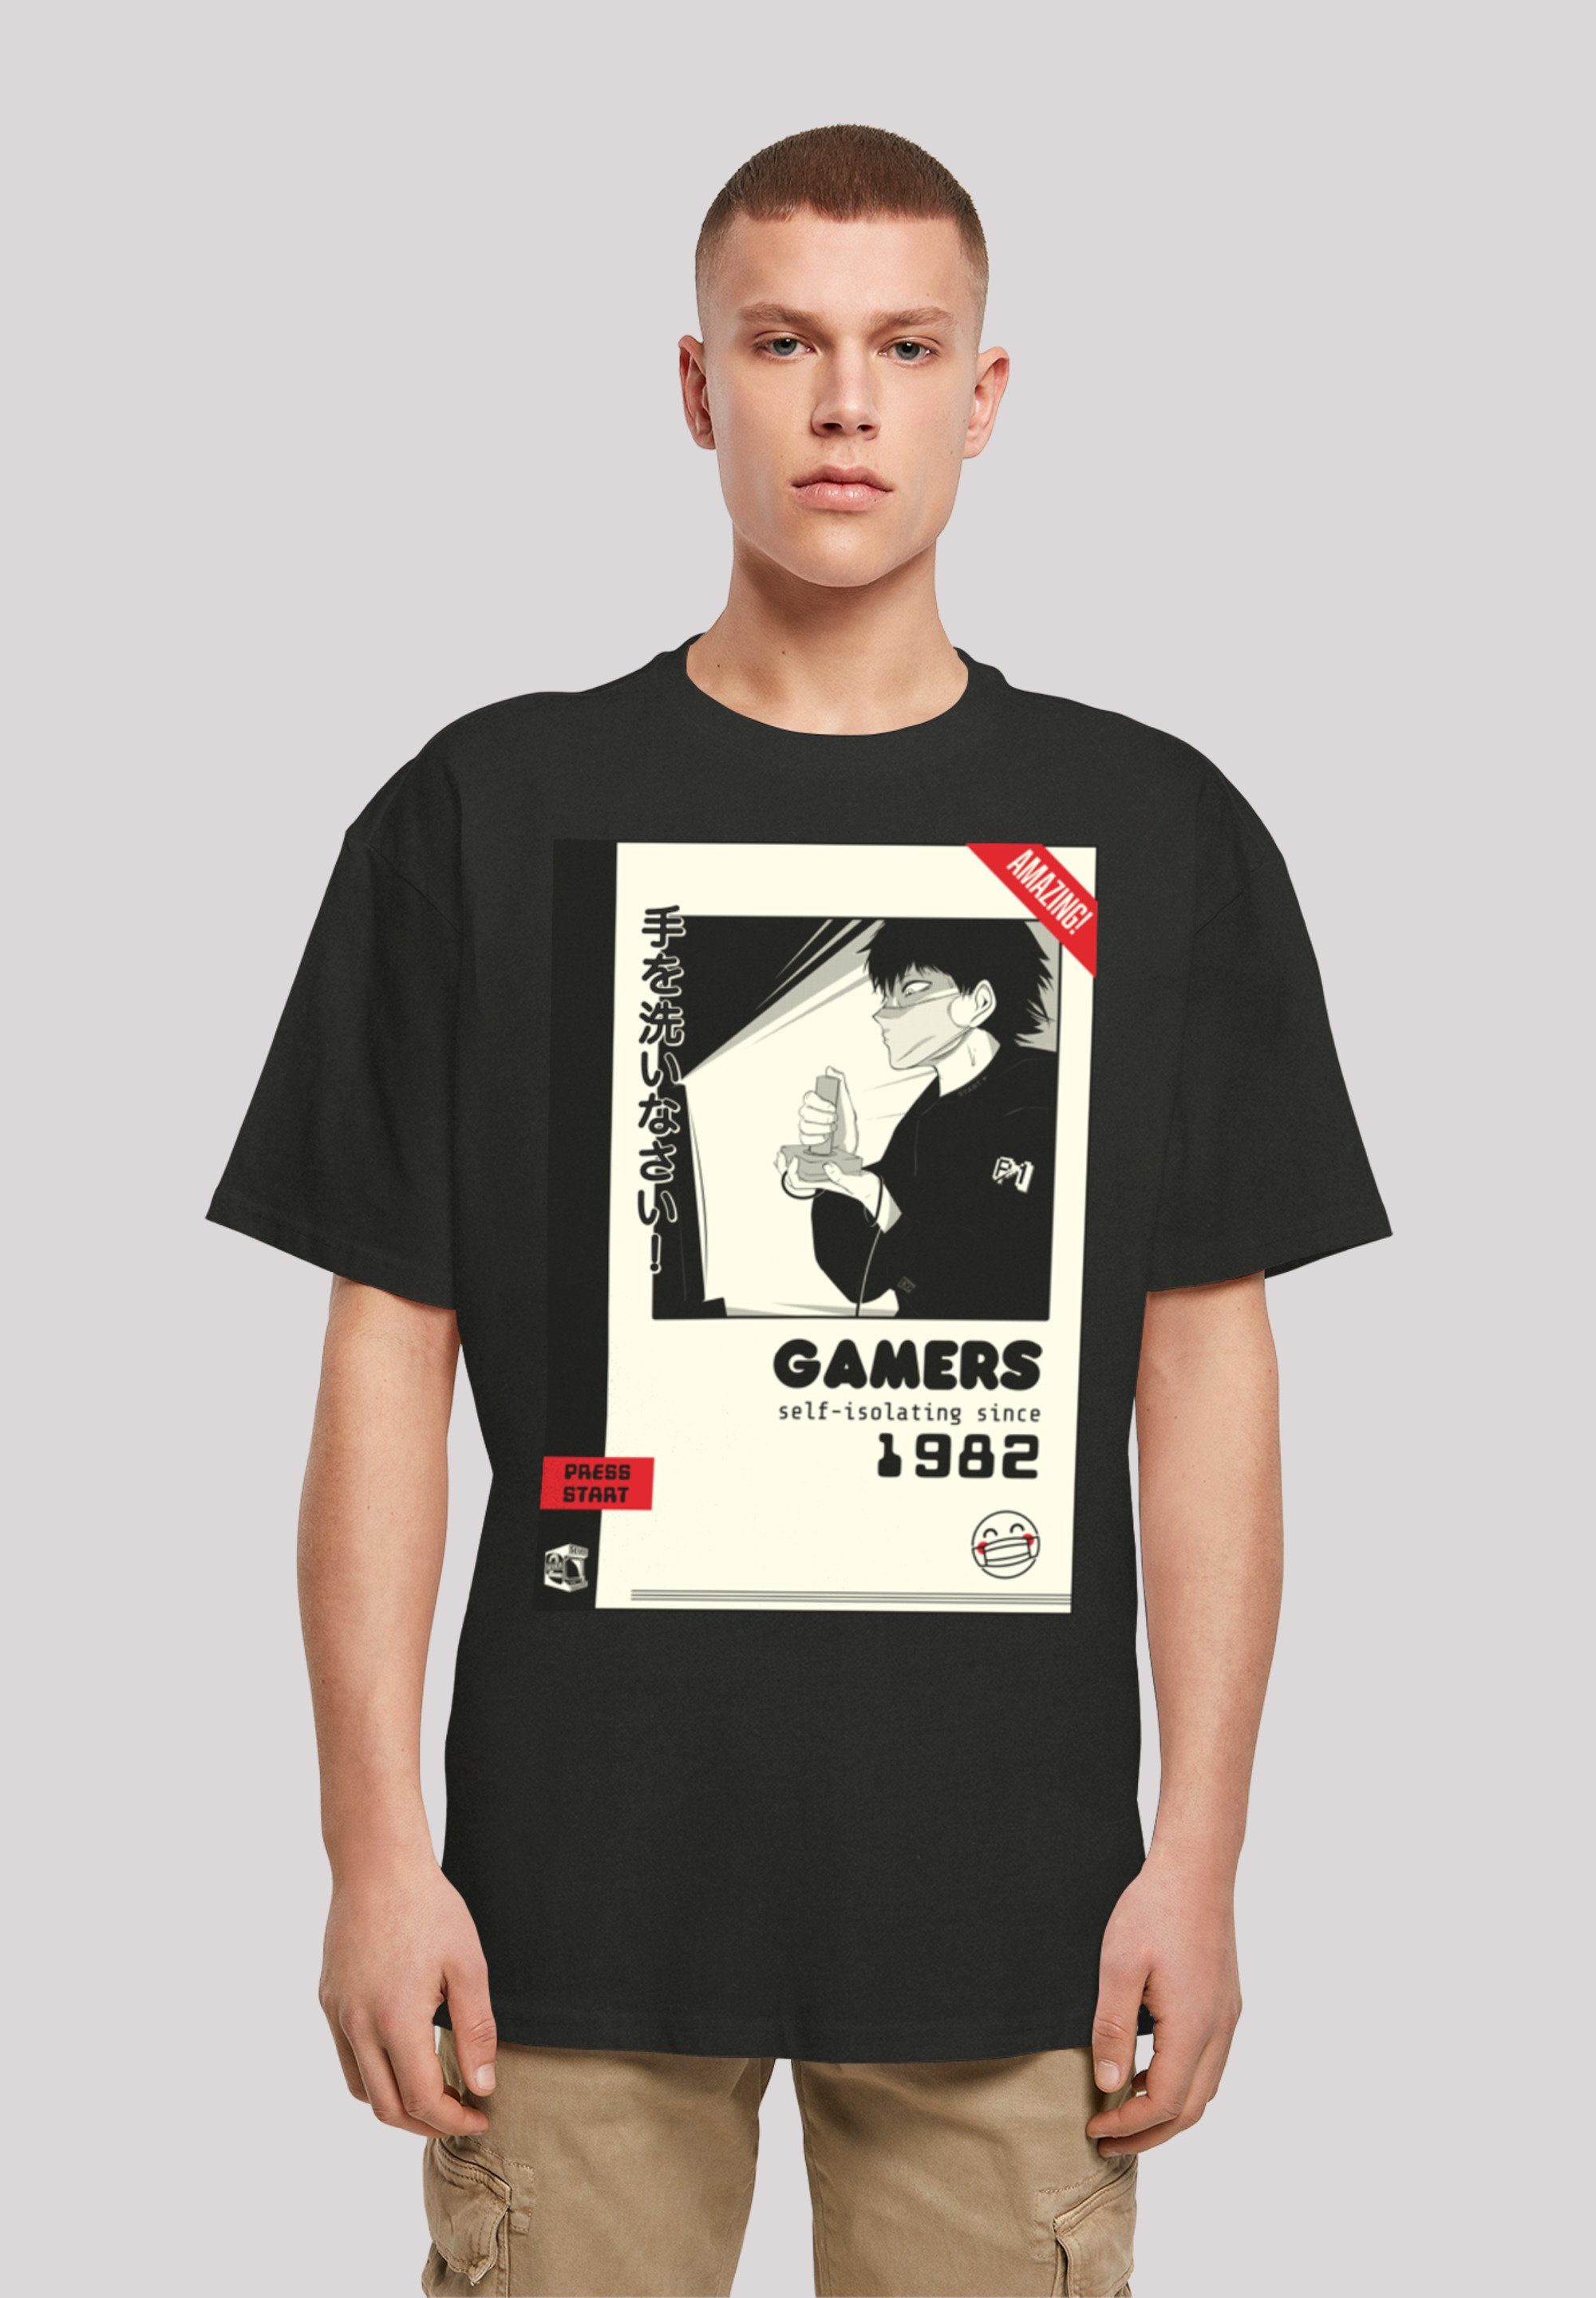 SEVENSQUARED Retro F4NT4STIC schwarz since 1982 self-isolating Gaming T-Shirt Print